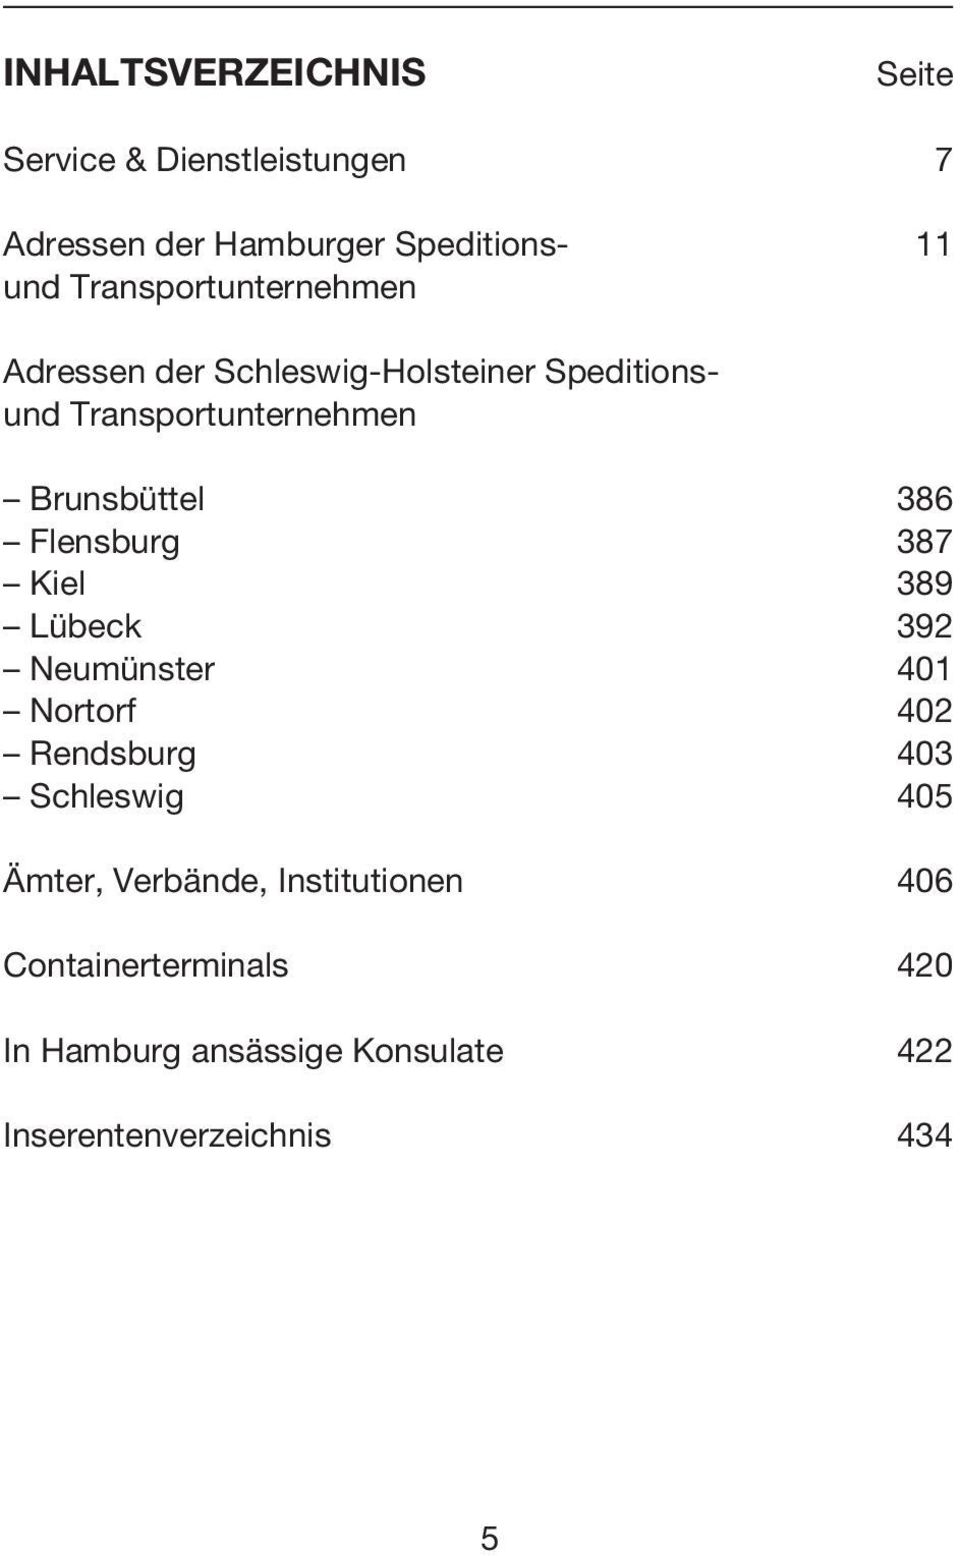 386 Flensburg 387 Kiel 389 Lübeck 392 Neumünster 401 Nortorf 402 Rendsburg 403 Schleswig 405 Ämter,